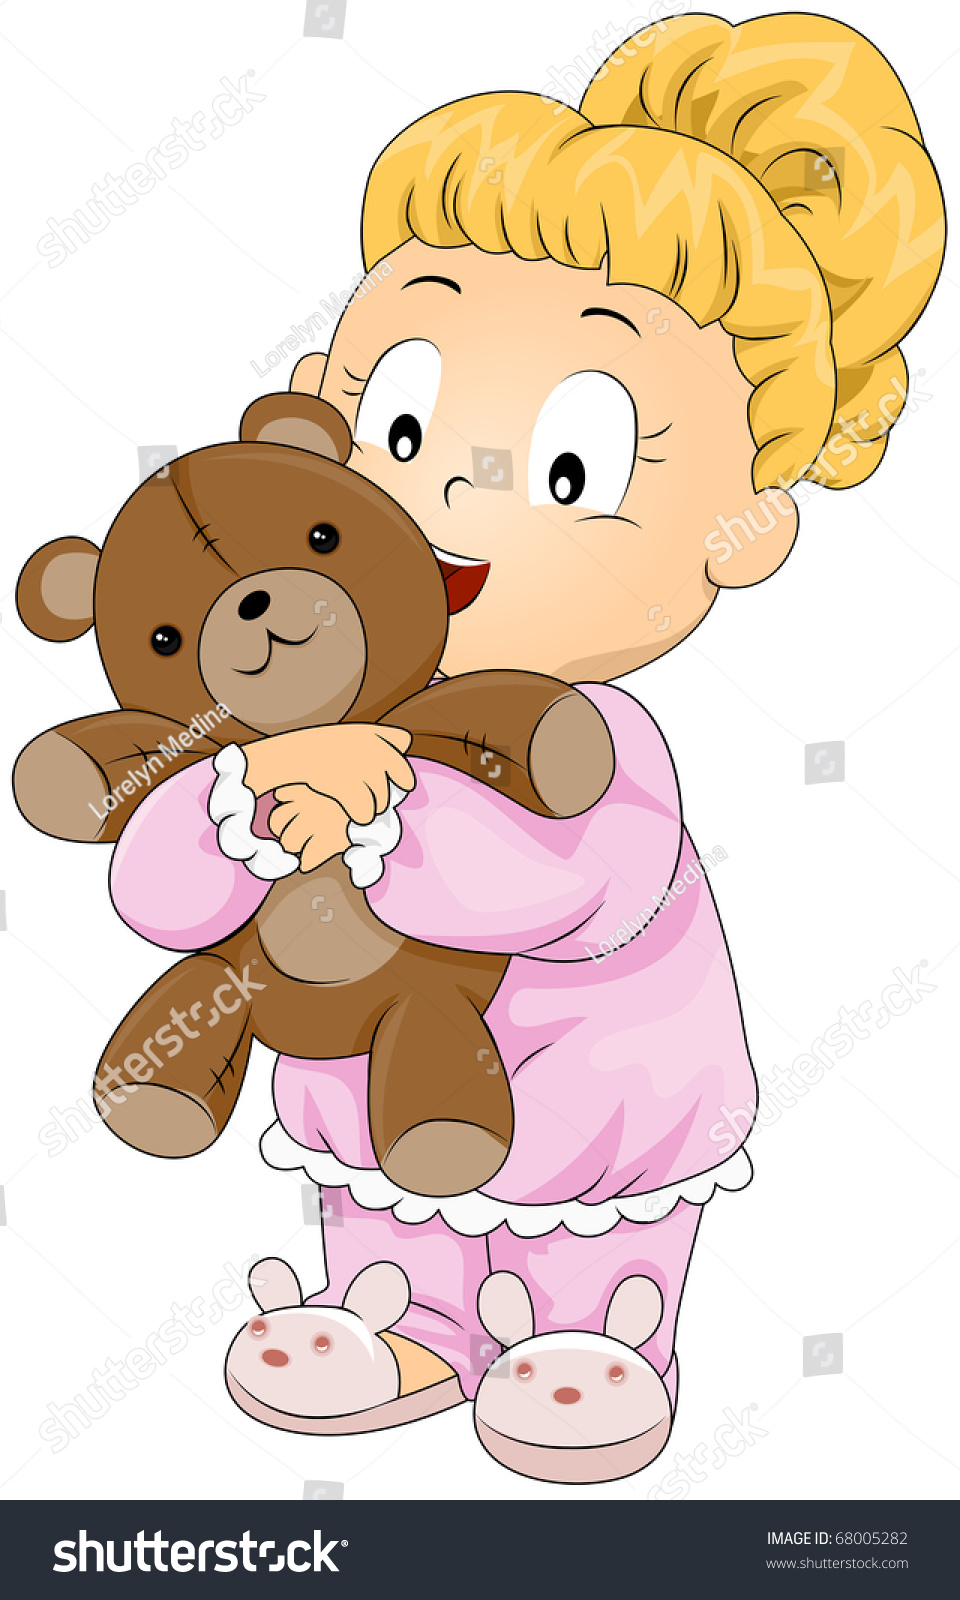 girl hugging stuffed animal